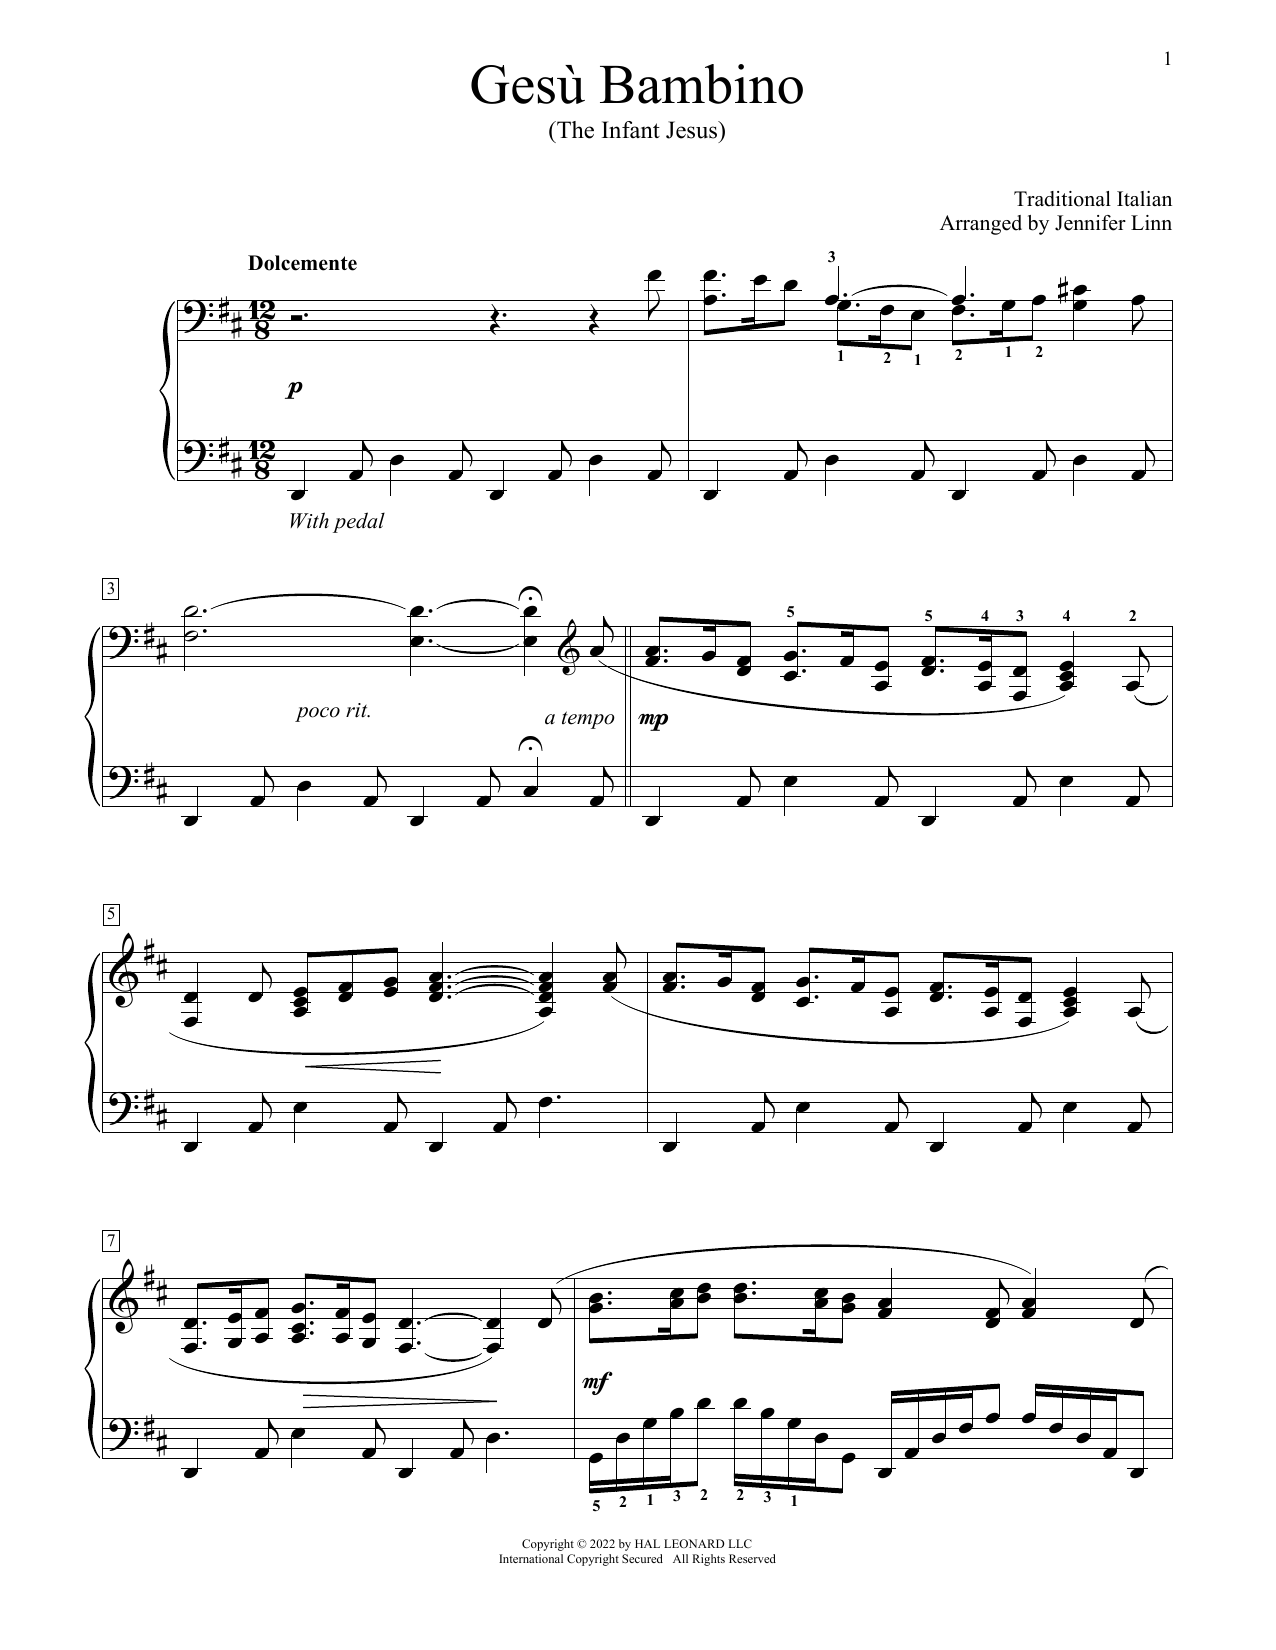 Traditional Italian Gesu Bambino (arr. Jennifer Linn) Sheet Music Notes & Chords for Educational Piano - Download or Print PDF